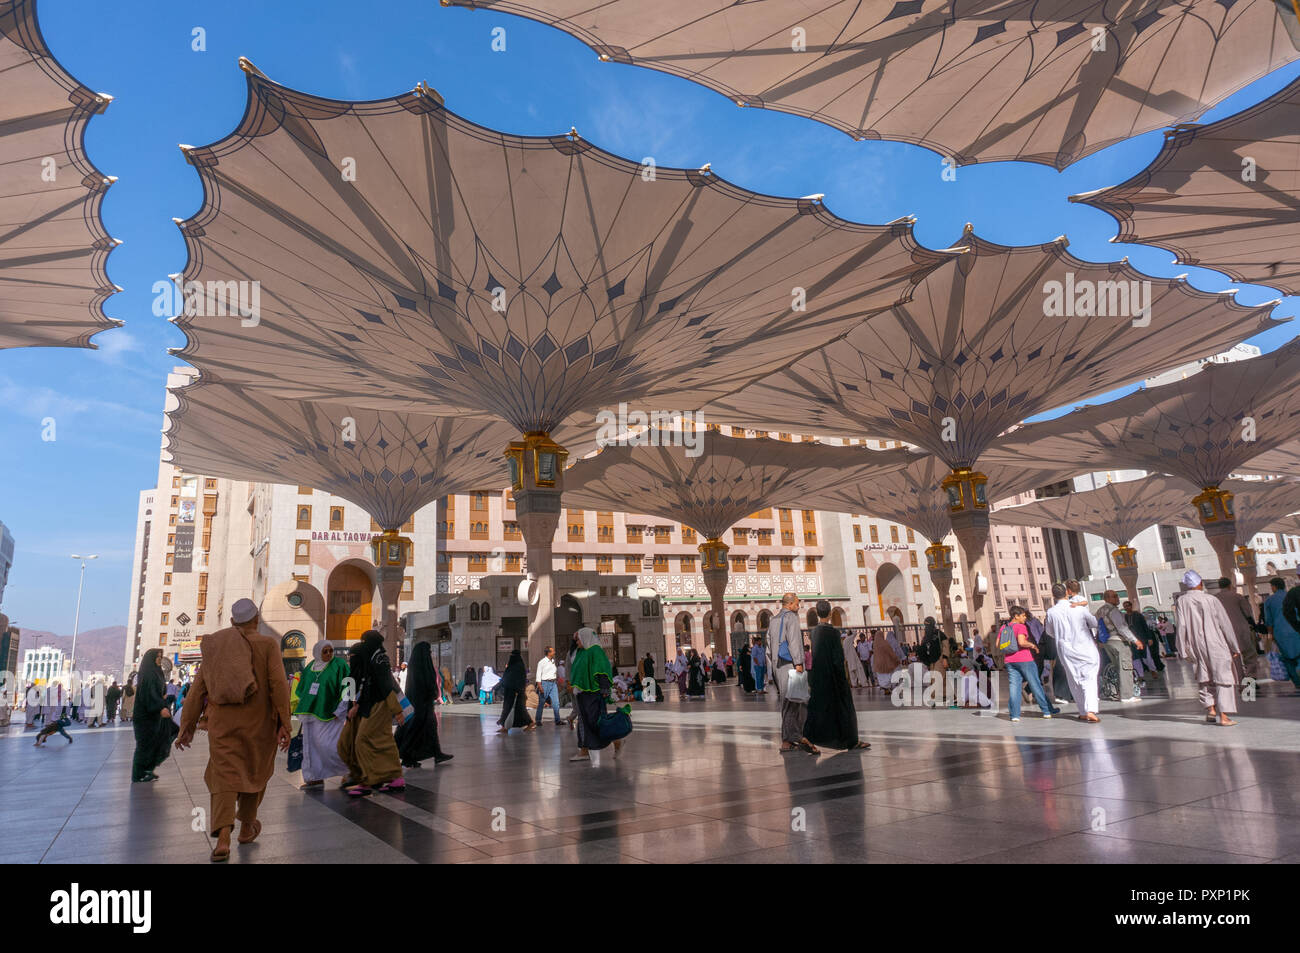 MEDINA,SAUDI ARABIA- CIRCA 2014 : view of giant canopies and pilgrims at Masjid Nabawi (Mosque) compound in Medina, Kingdom of Saudi Arabia. Nabawi mo Stock Photo